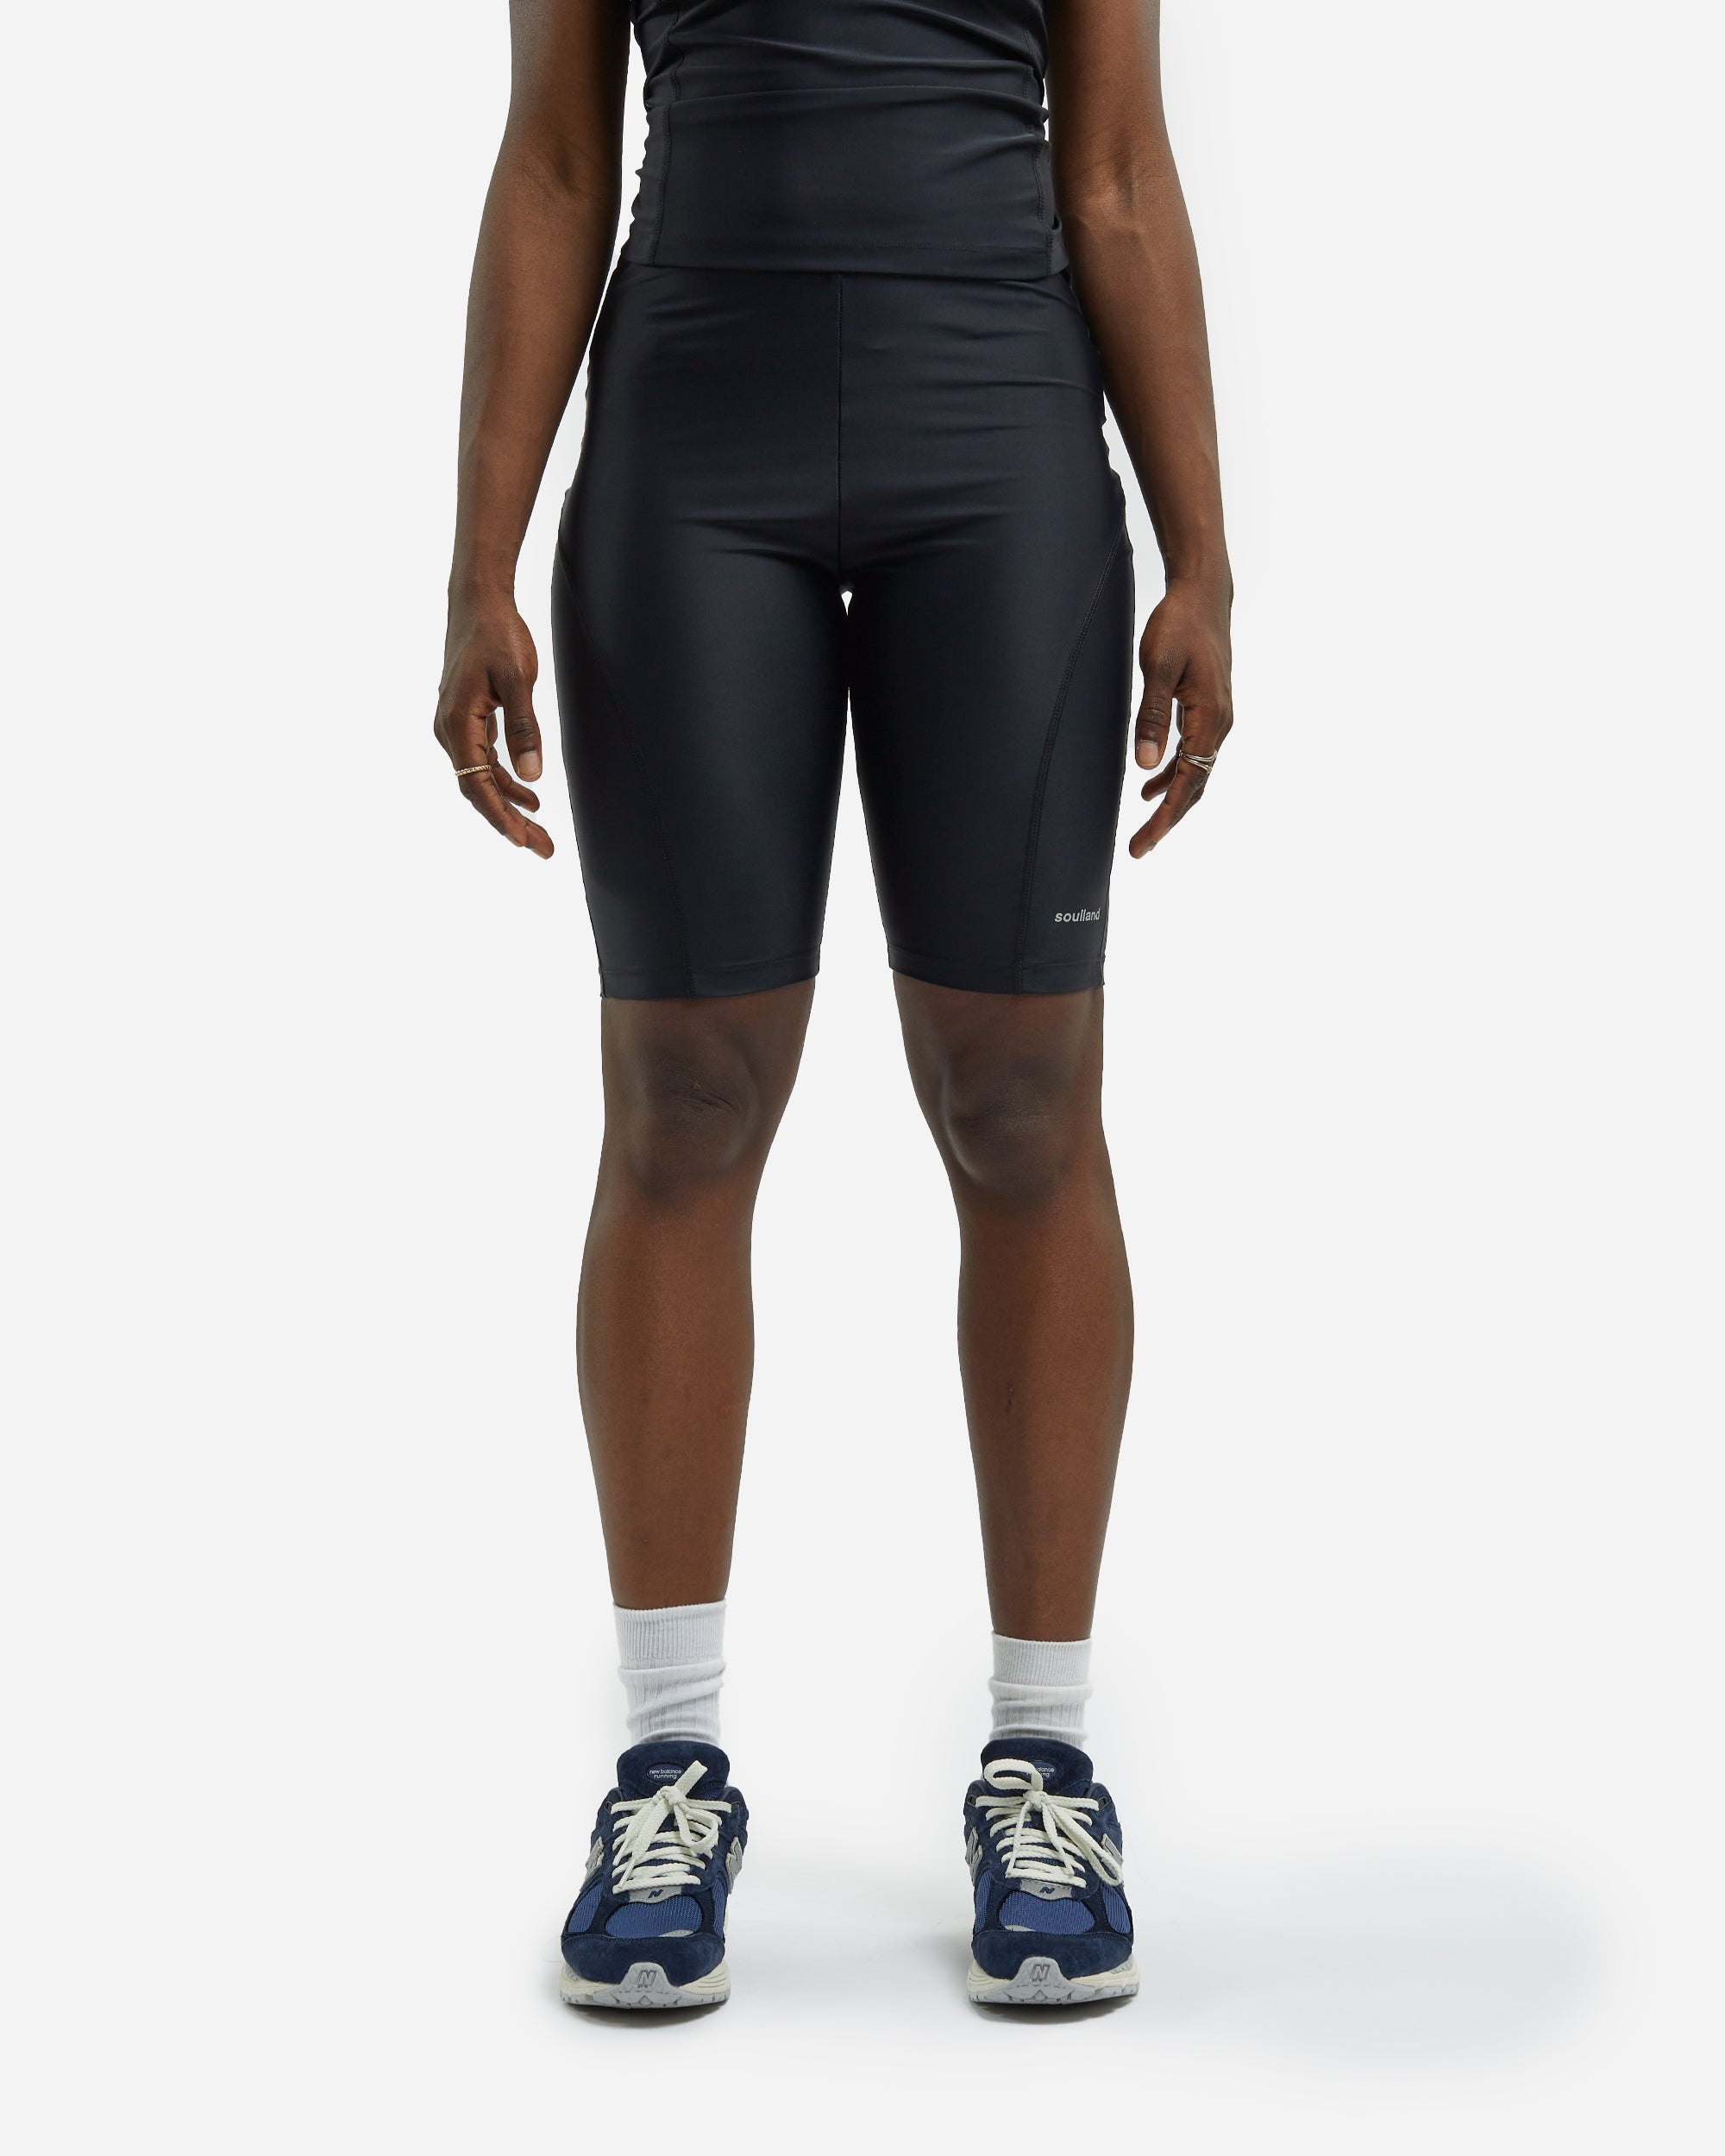 SOULLAND Becca shorts Black 1171-1029